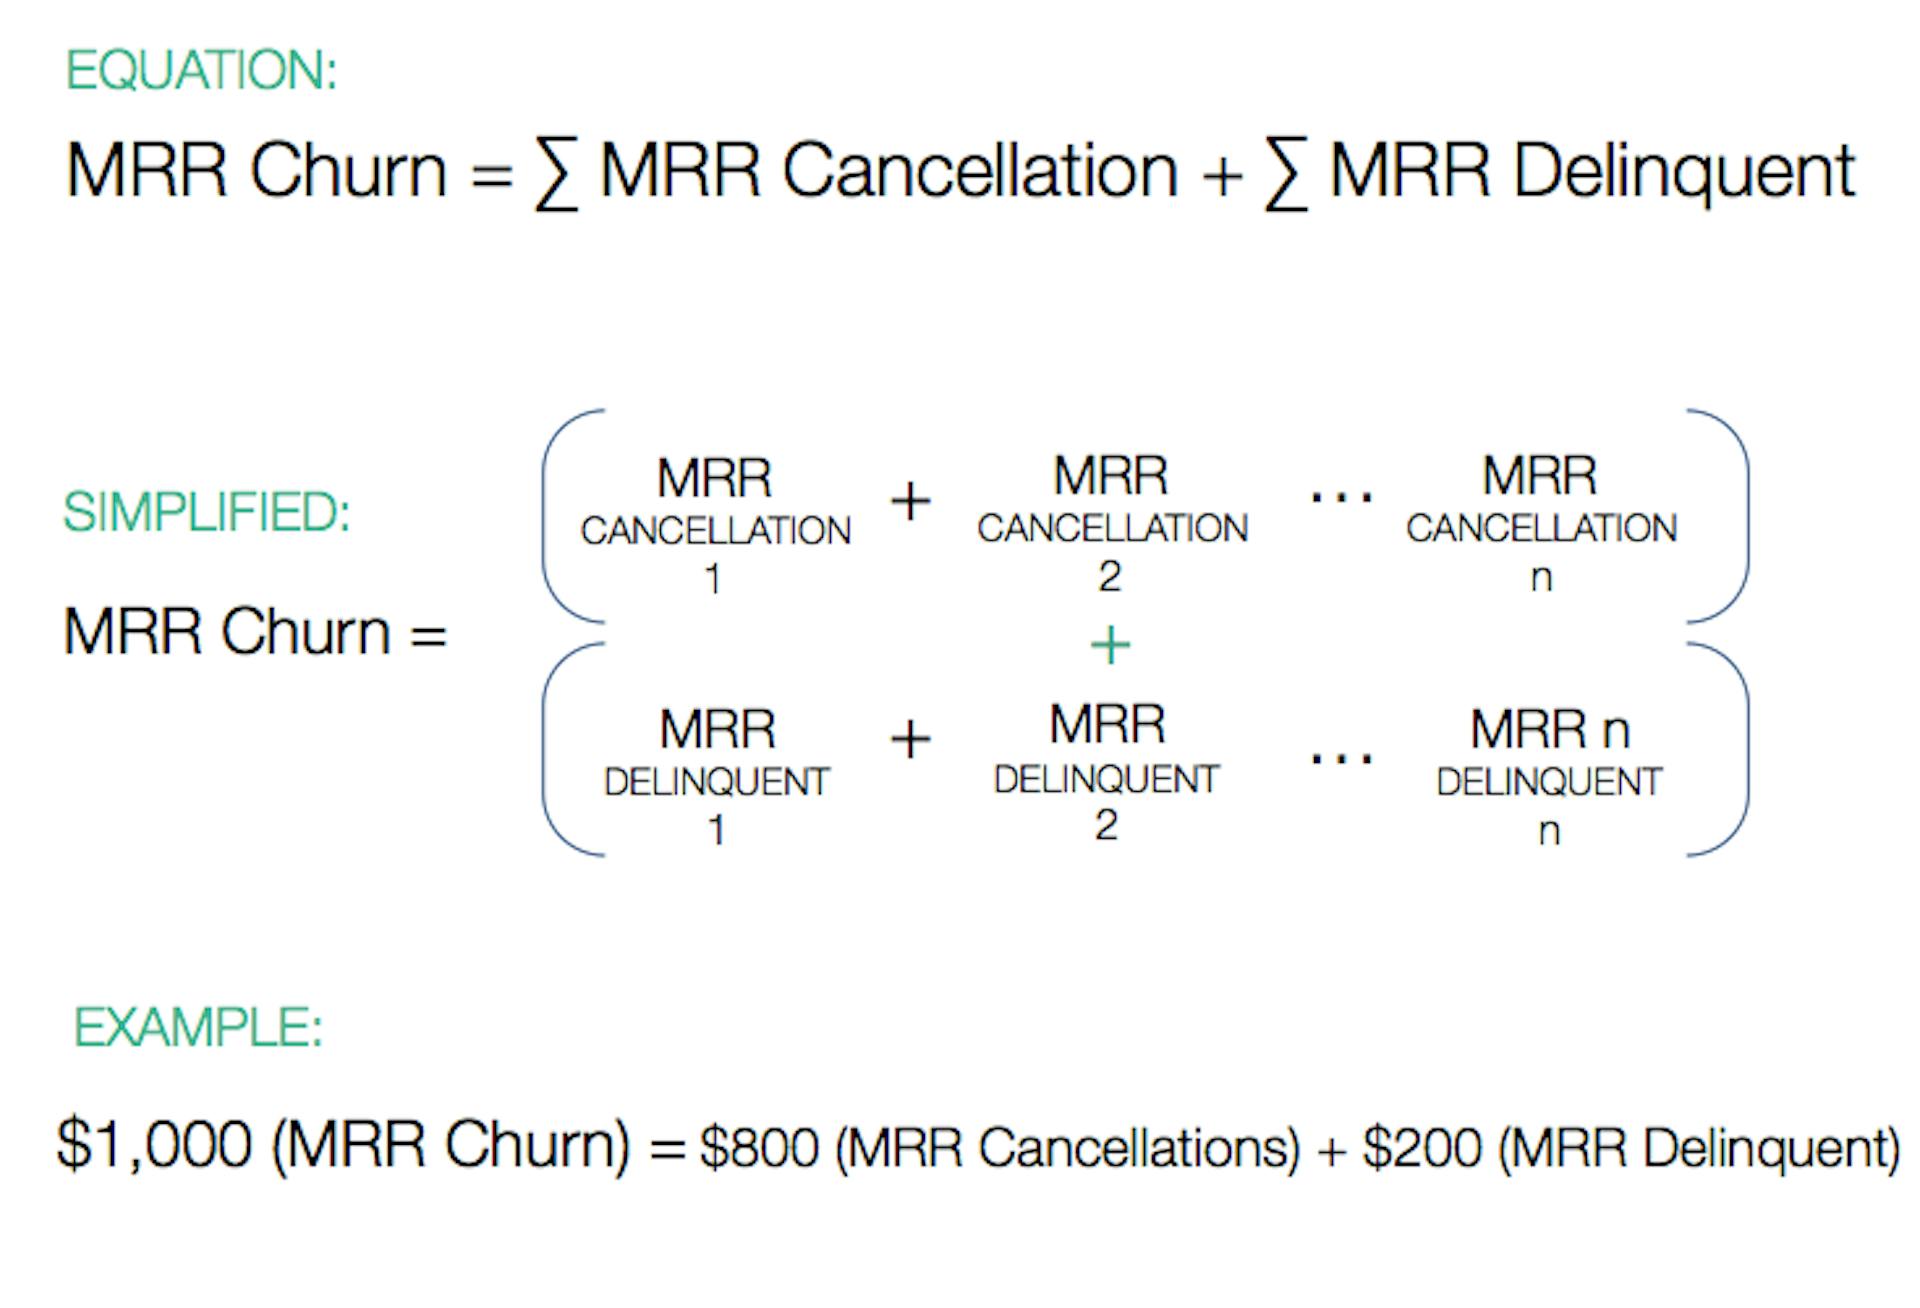 MRR churn = Sum of MRR cancellation + Sum of MRR delinquent